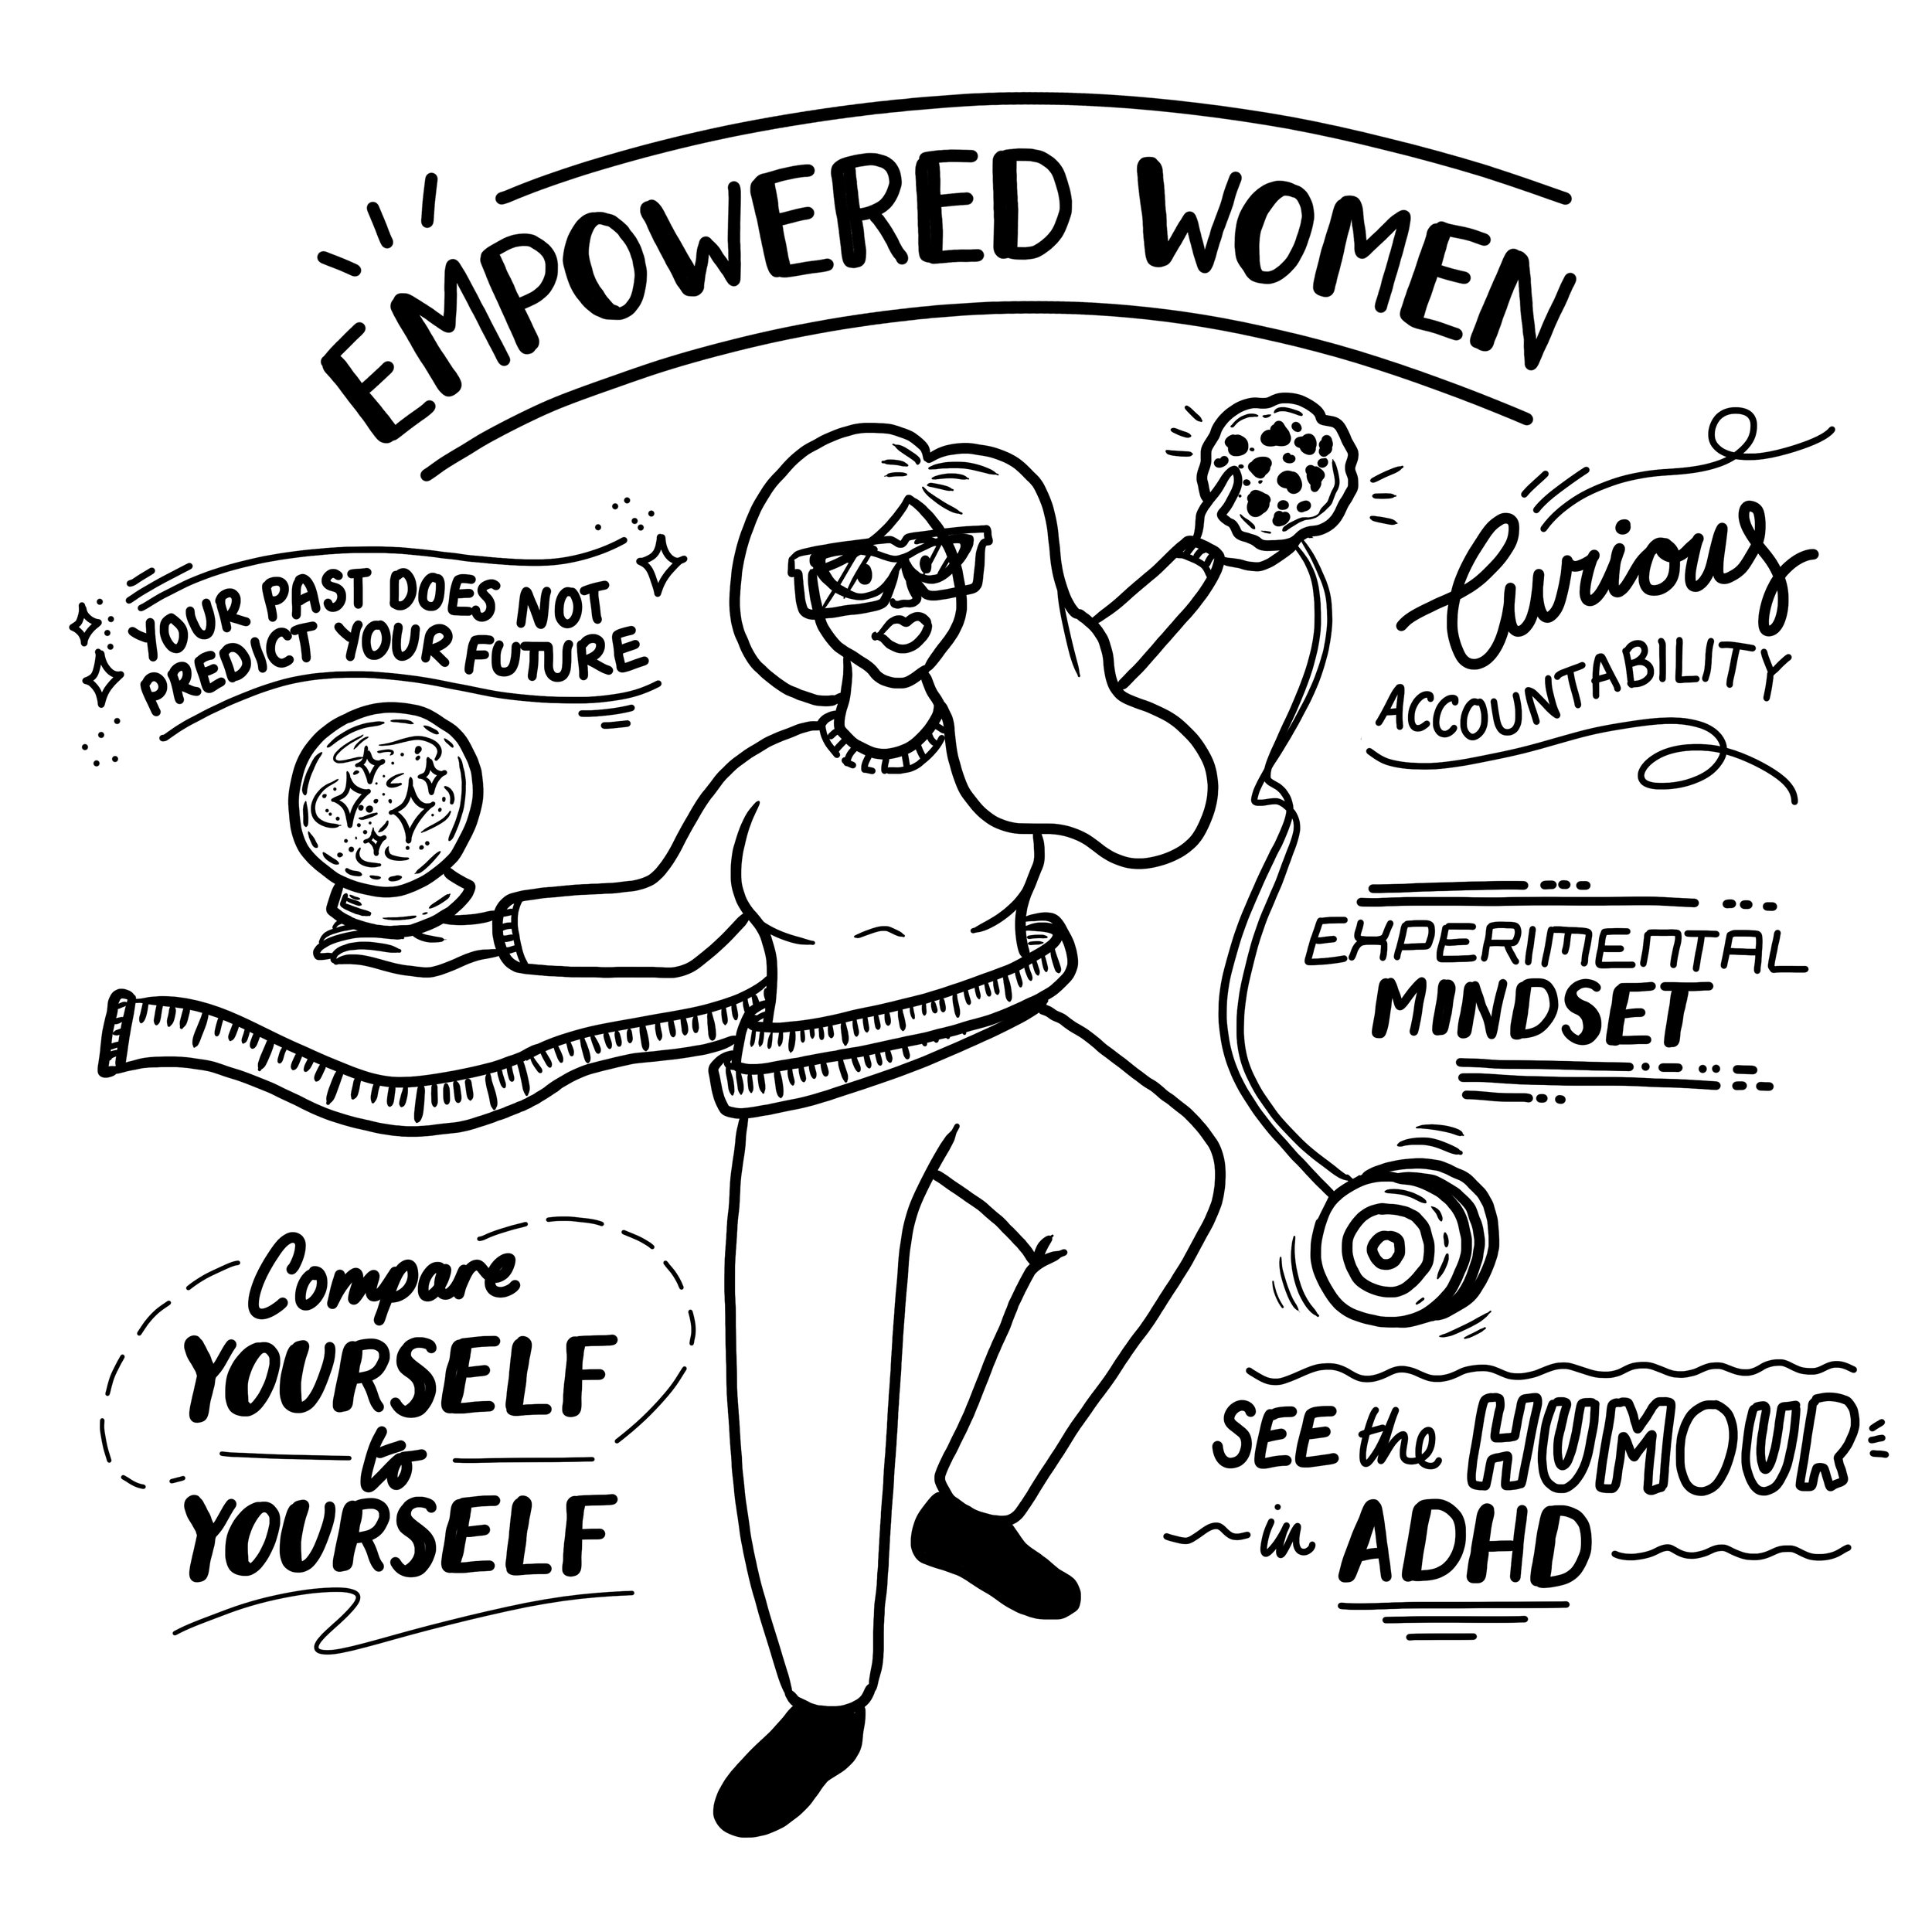 RosaliPublishing_EmpowermentWomenADHD_Illustration8_v1a.jpg